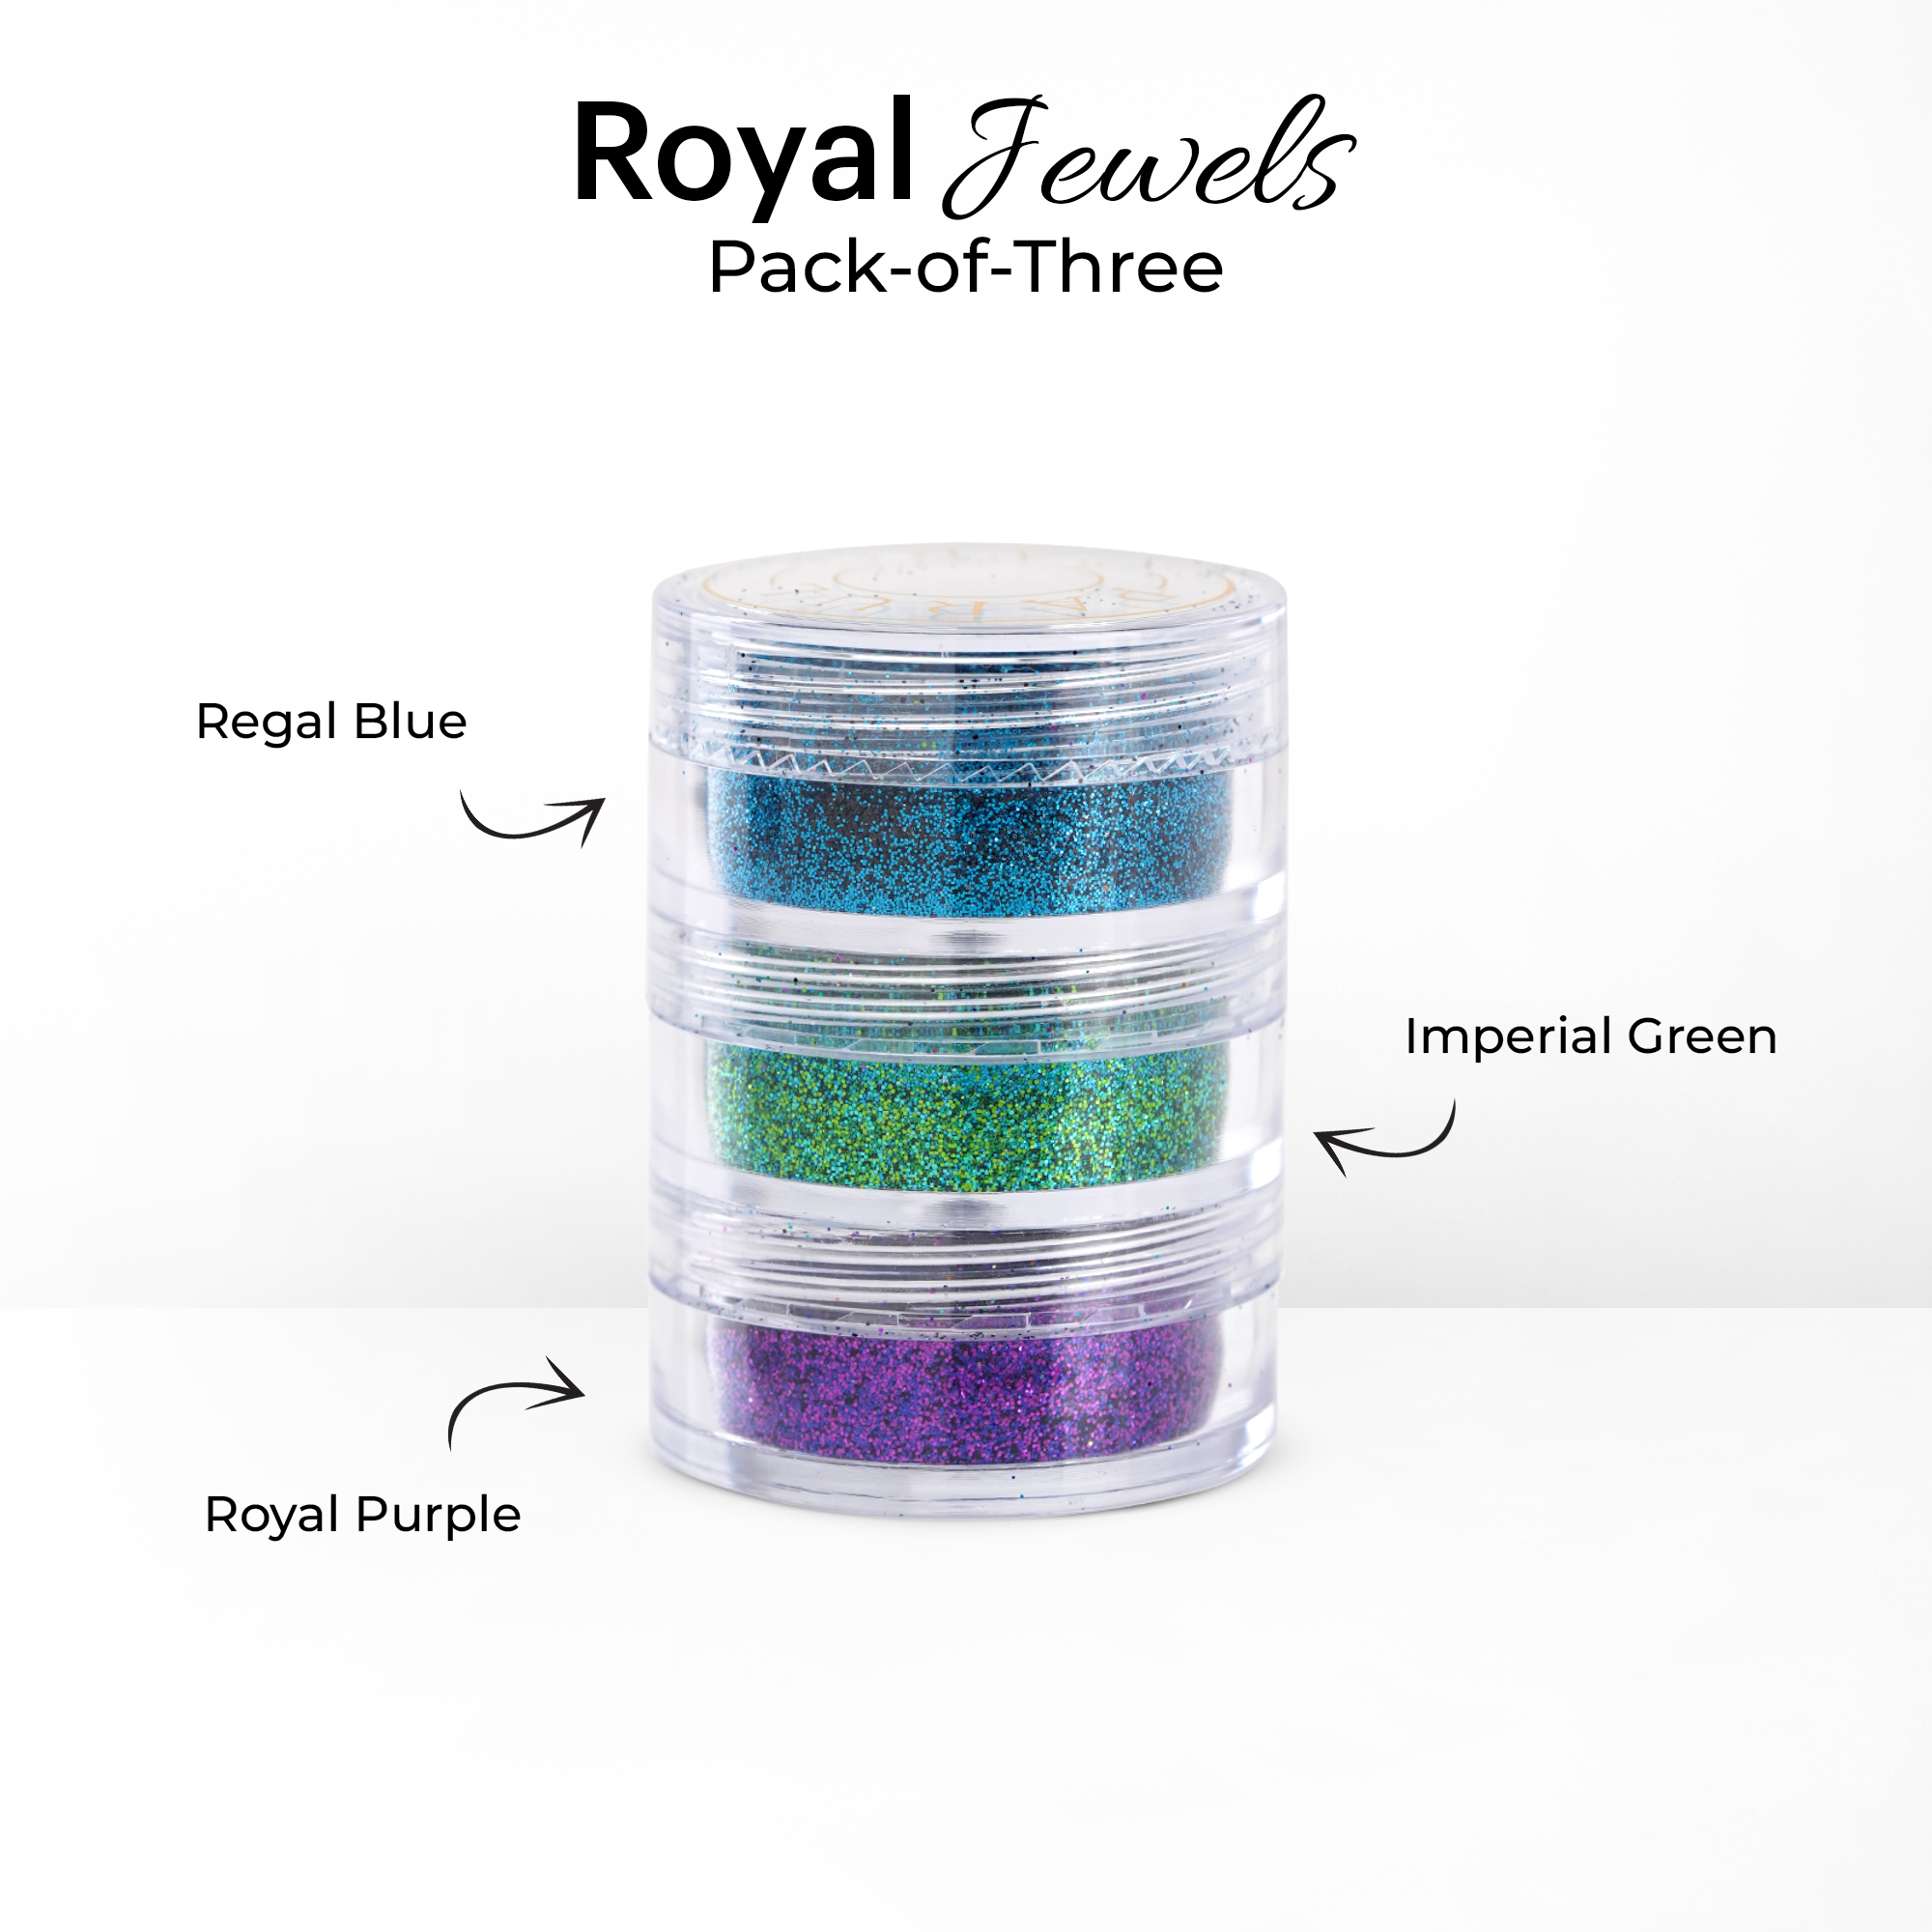 Royal Jewels Pack-of-Three Glitter Set